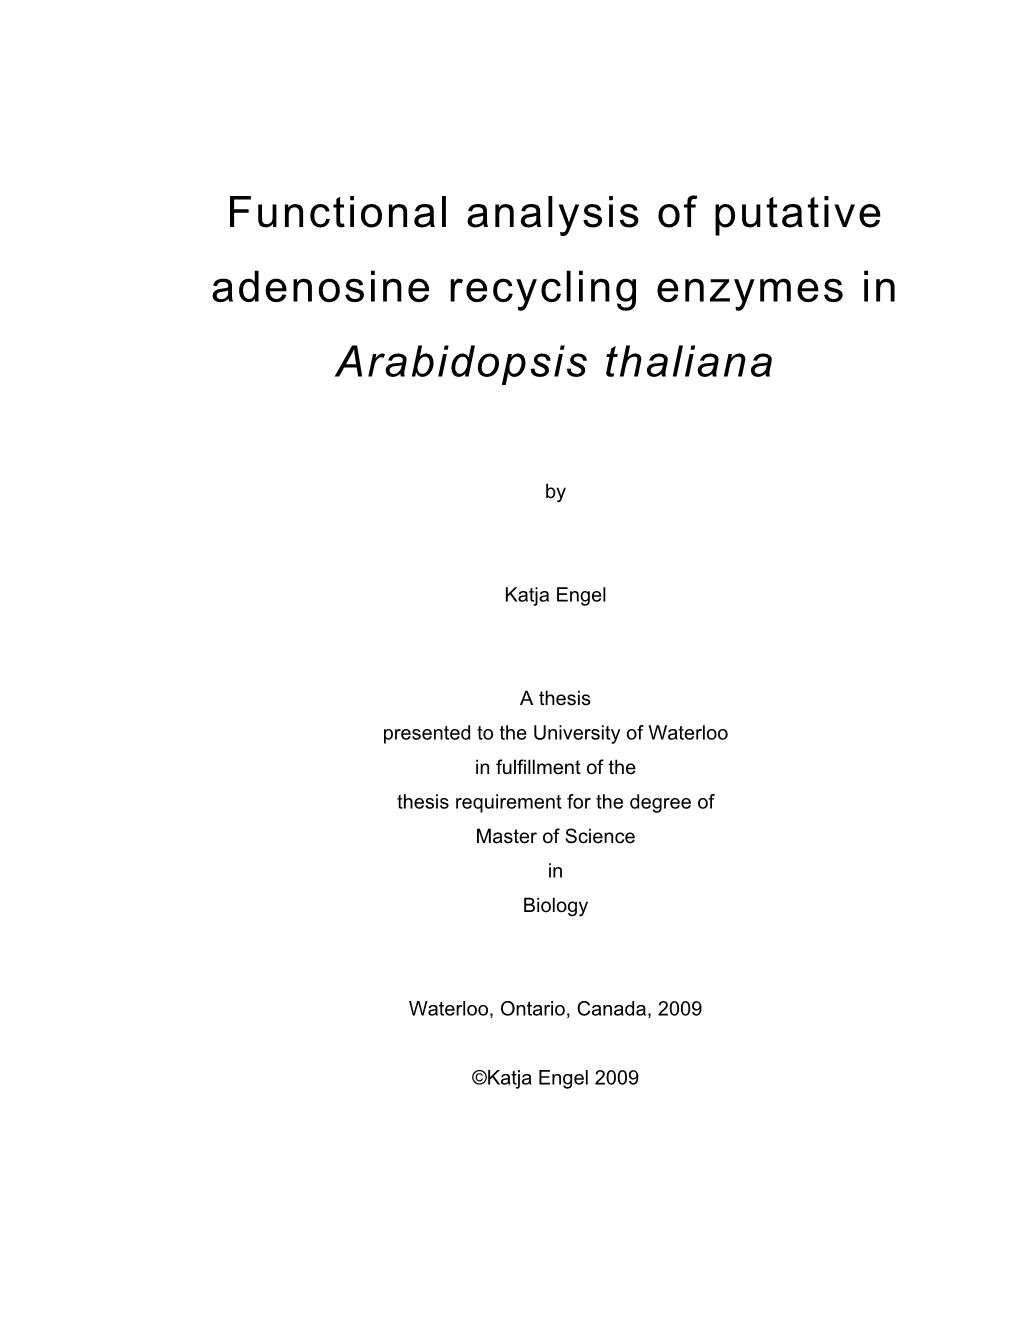 Functional Analysis of Putative Adenosine Recycling Enzymes in Arabidopsis Thaliana